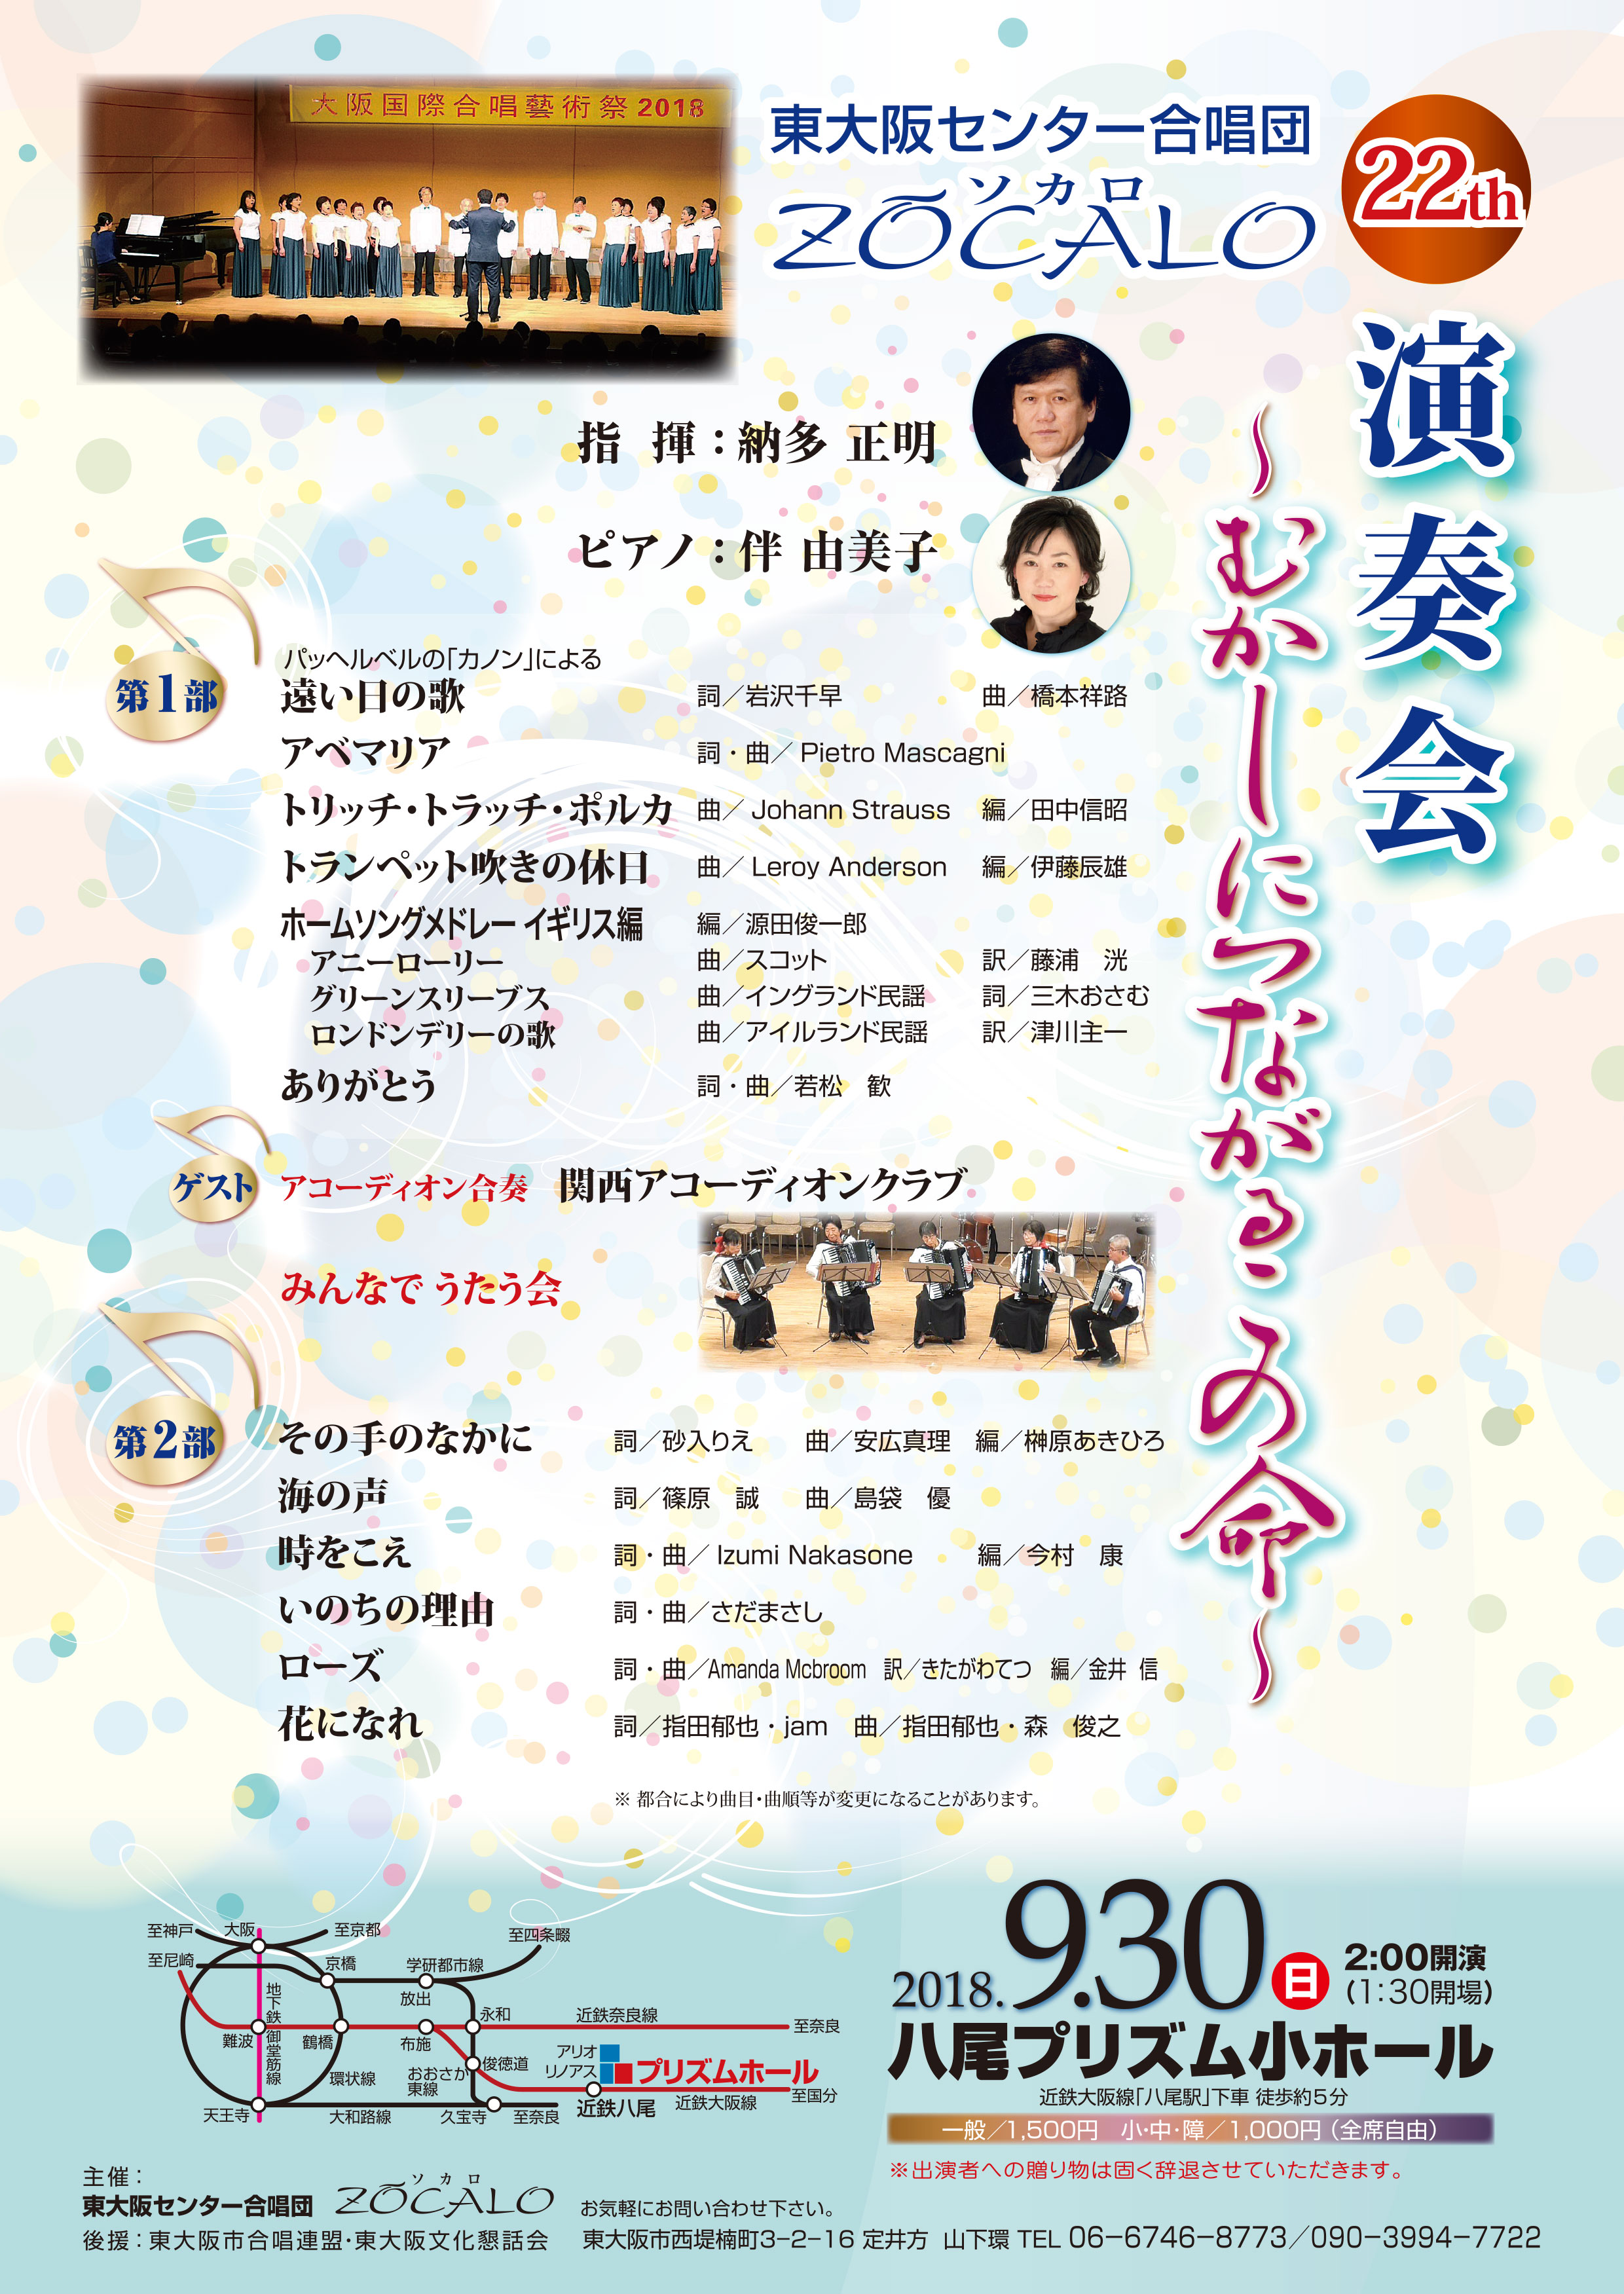 22th東大阪センター合唱団ソカロ演奏会